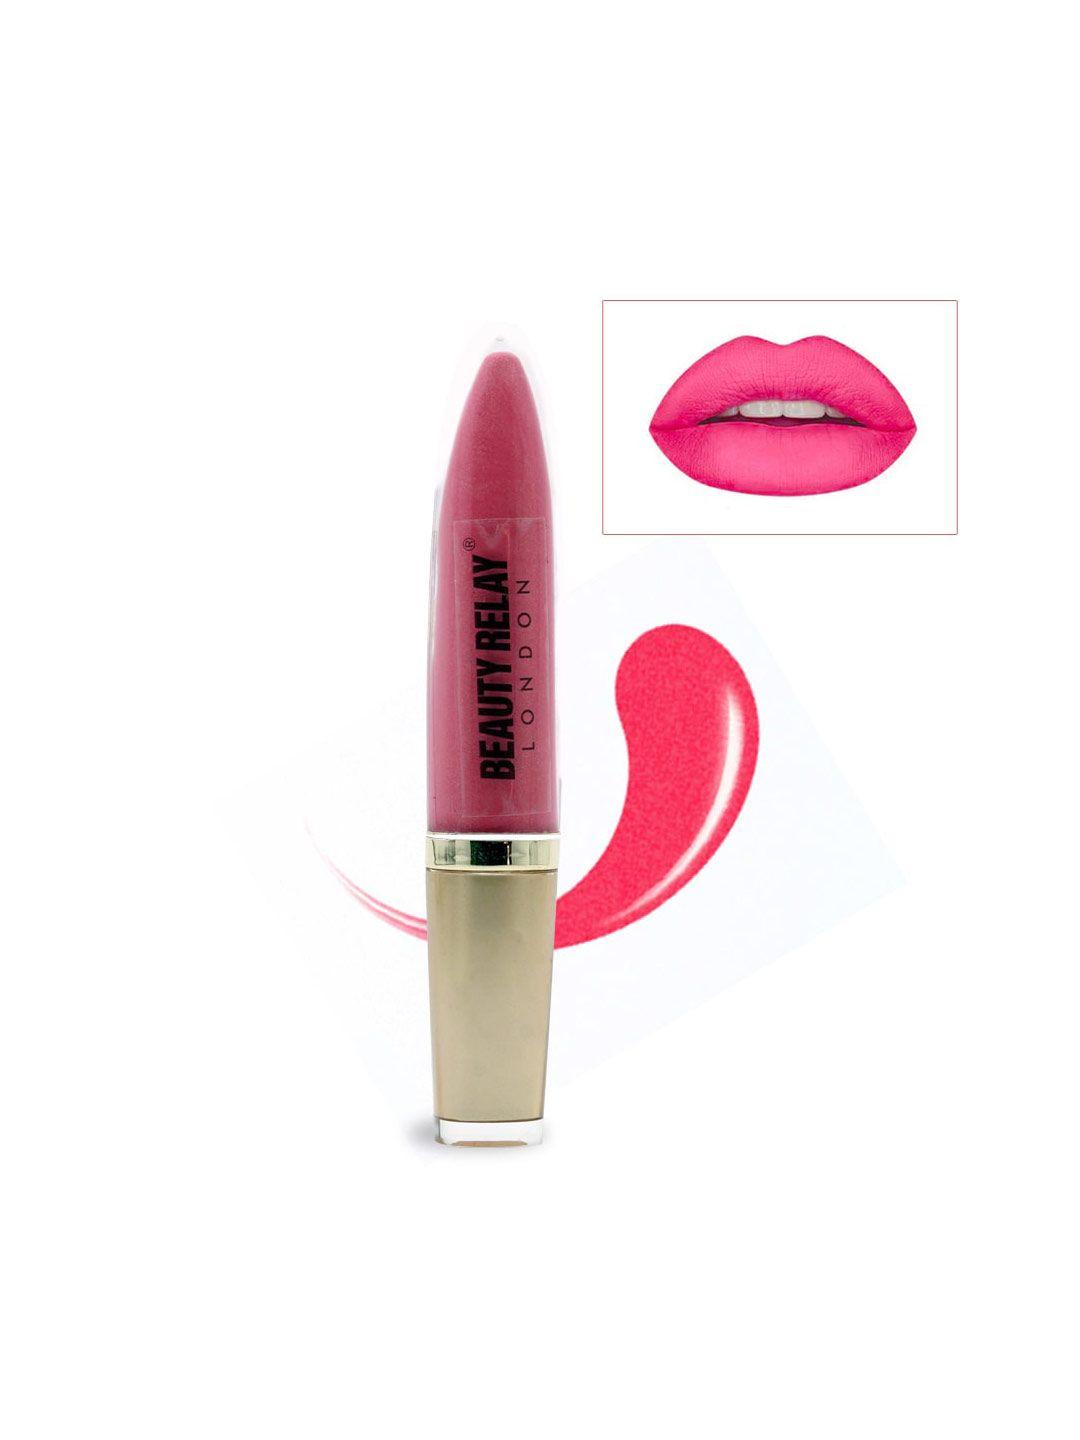 beautyrelay london marker lip & cheek gleam lip gloss 5g - classic pink